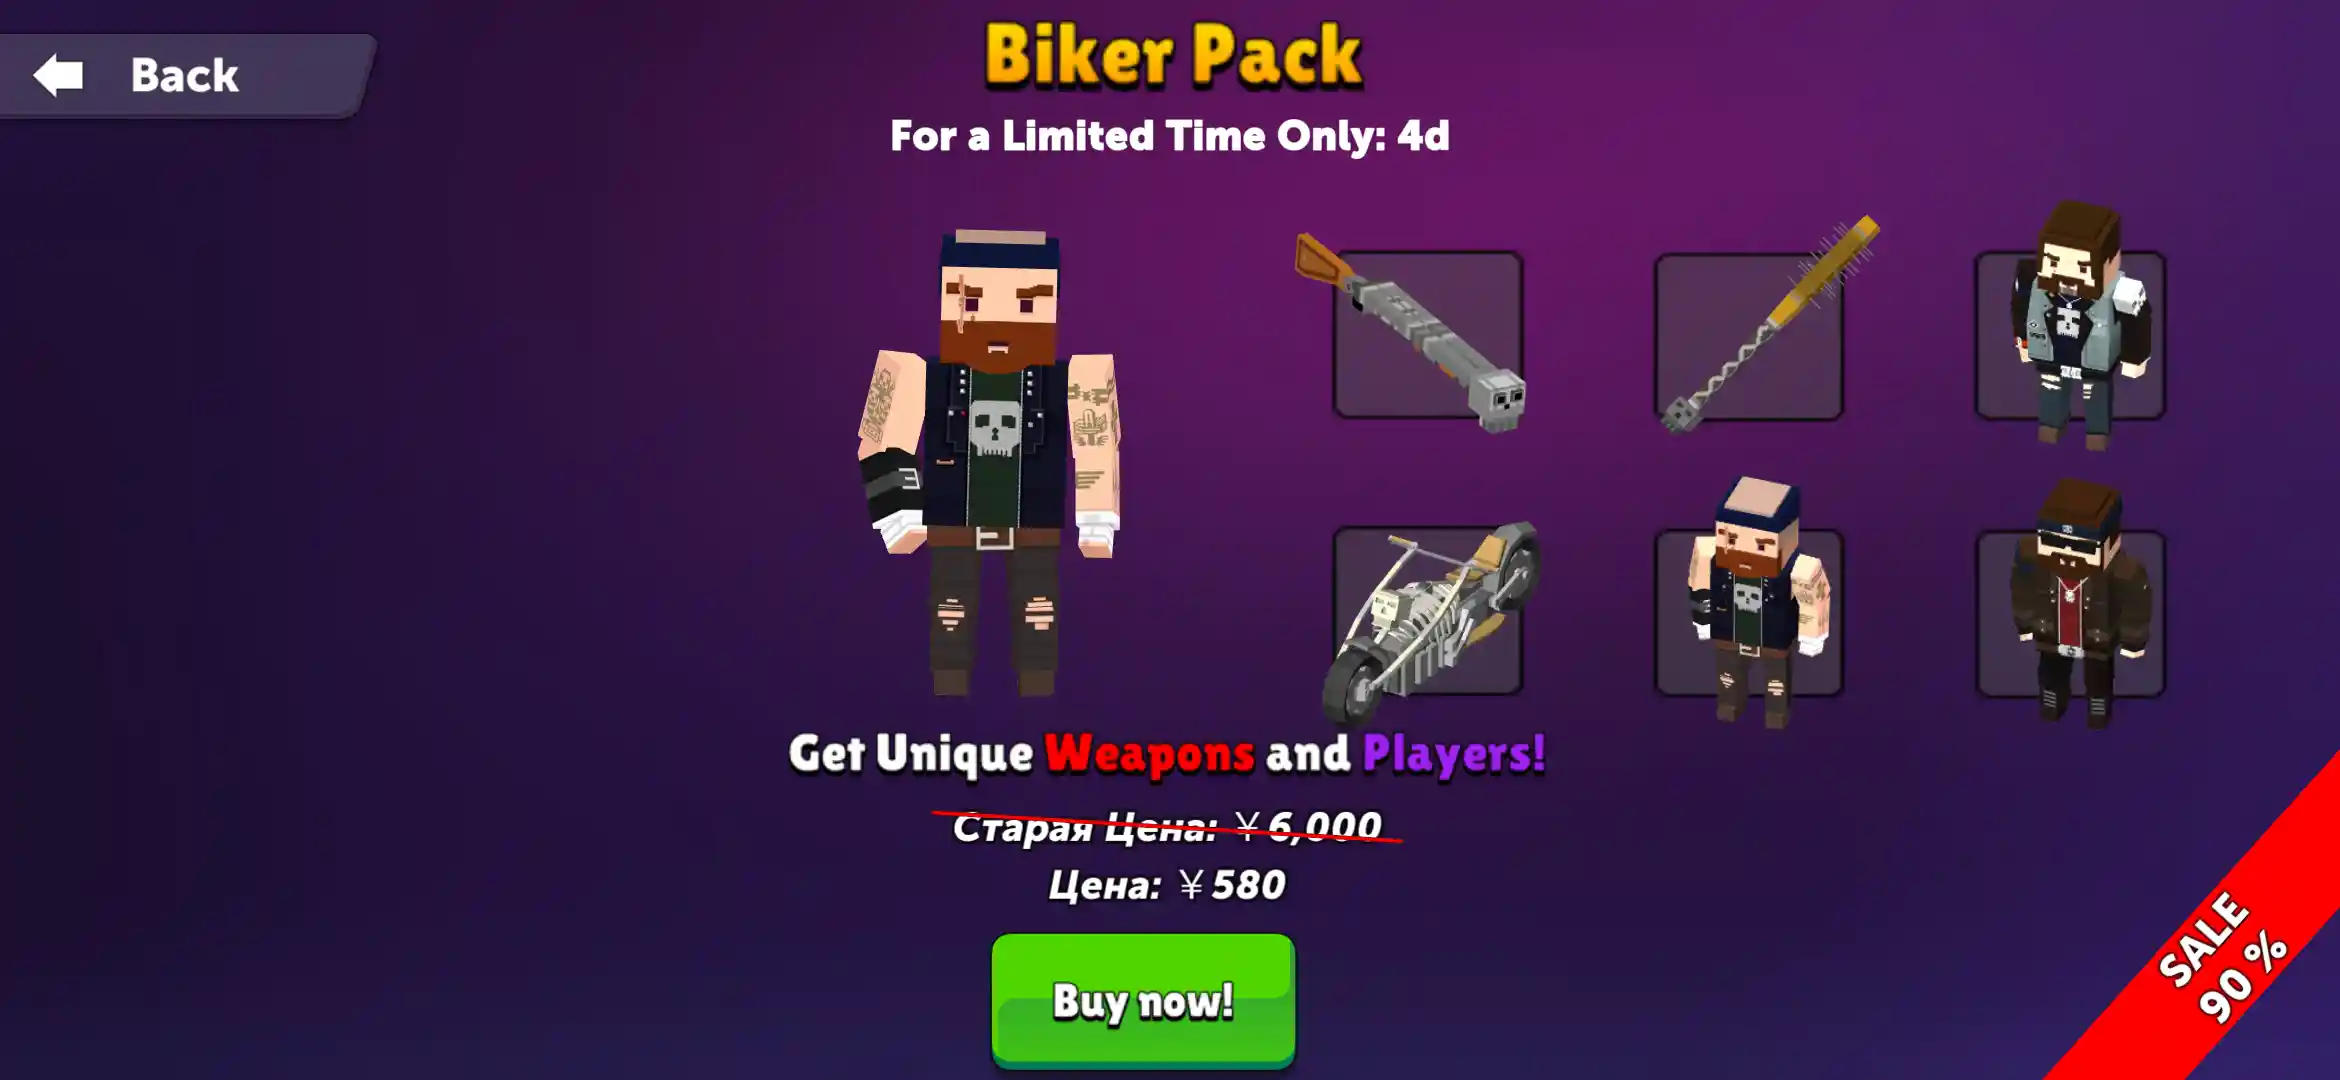 Biker Pack.jpg